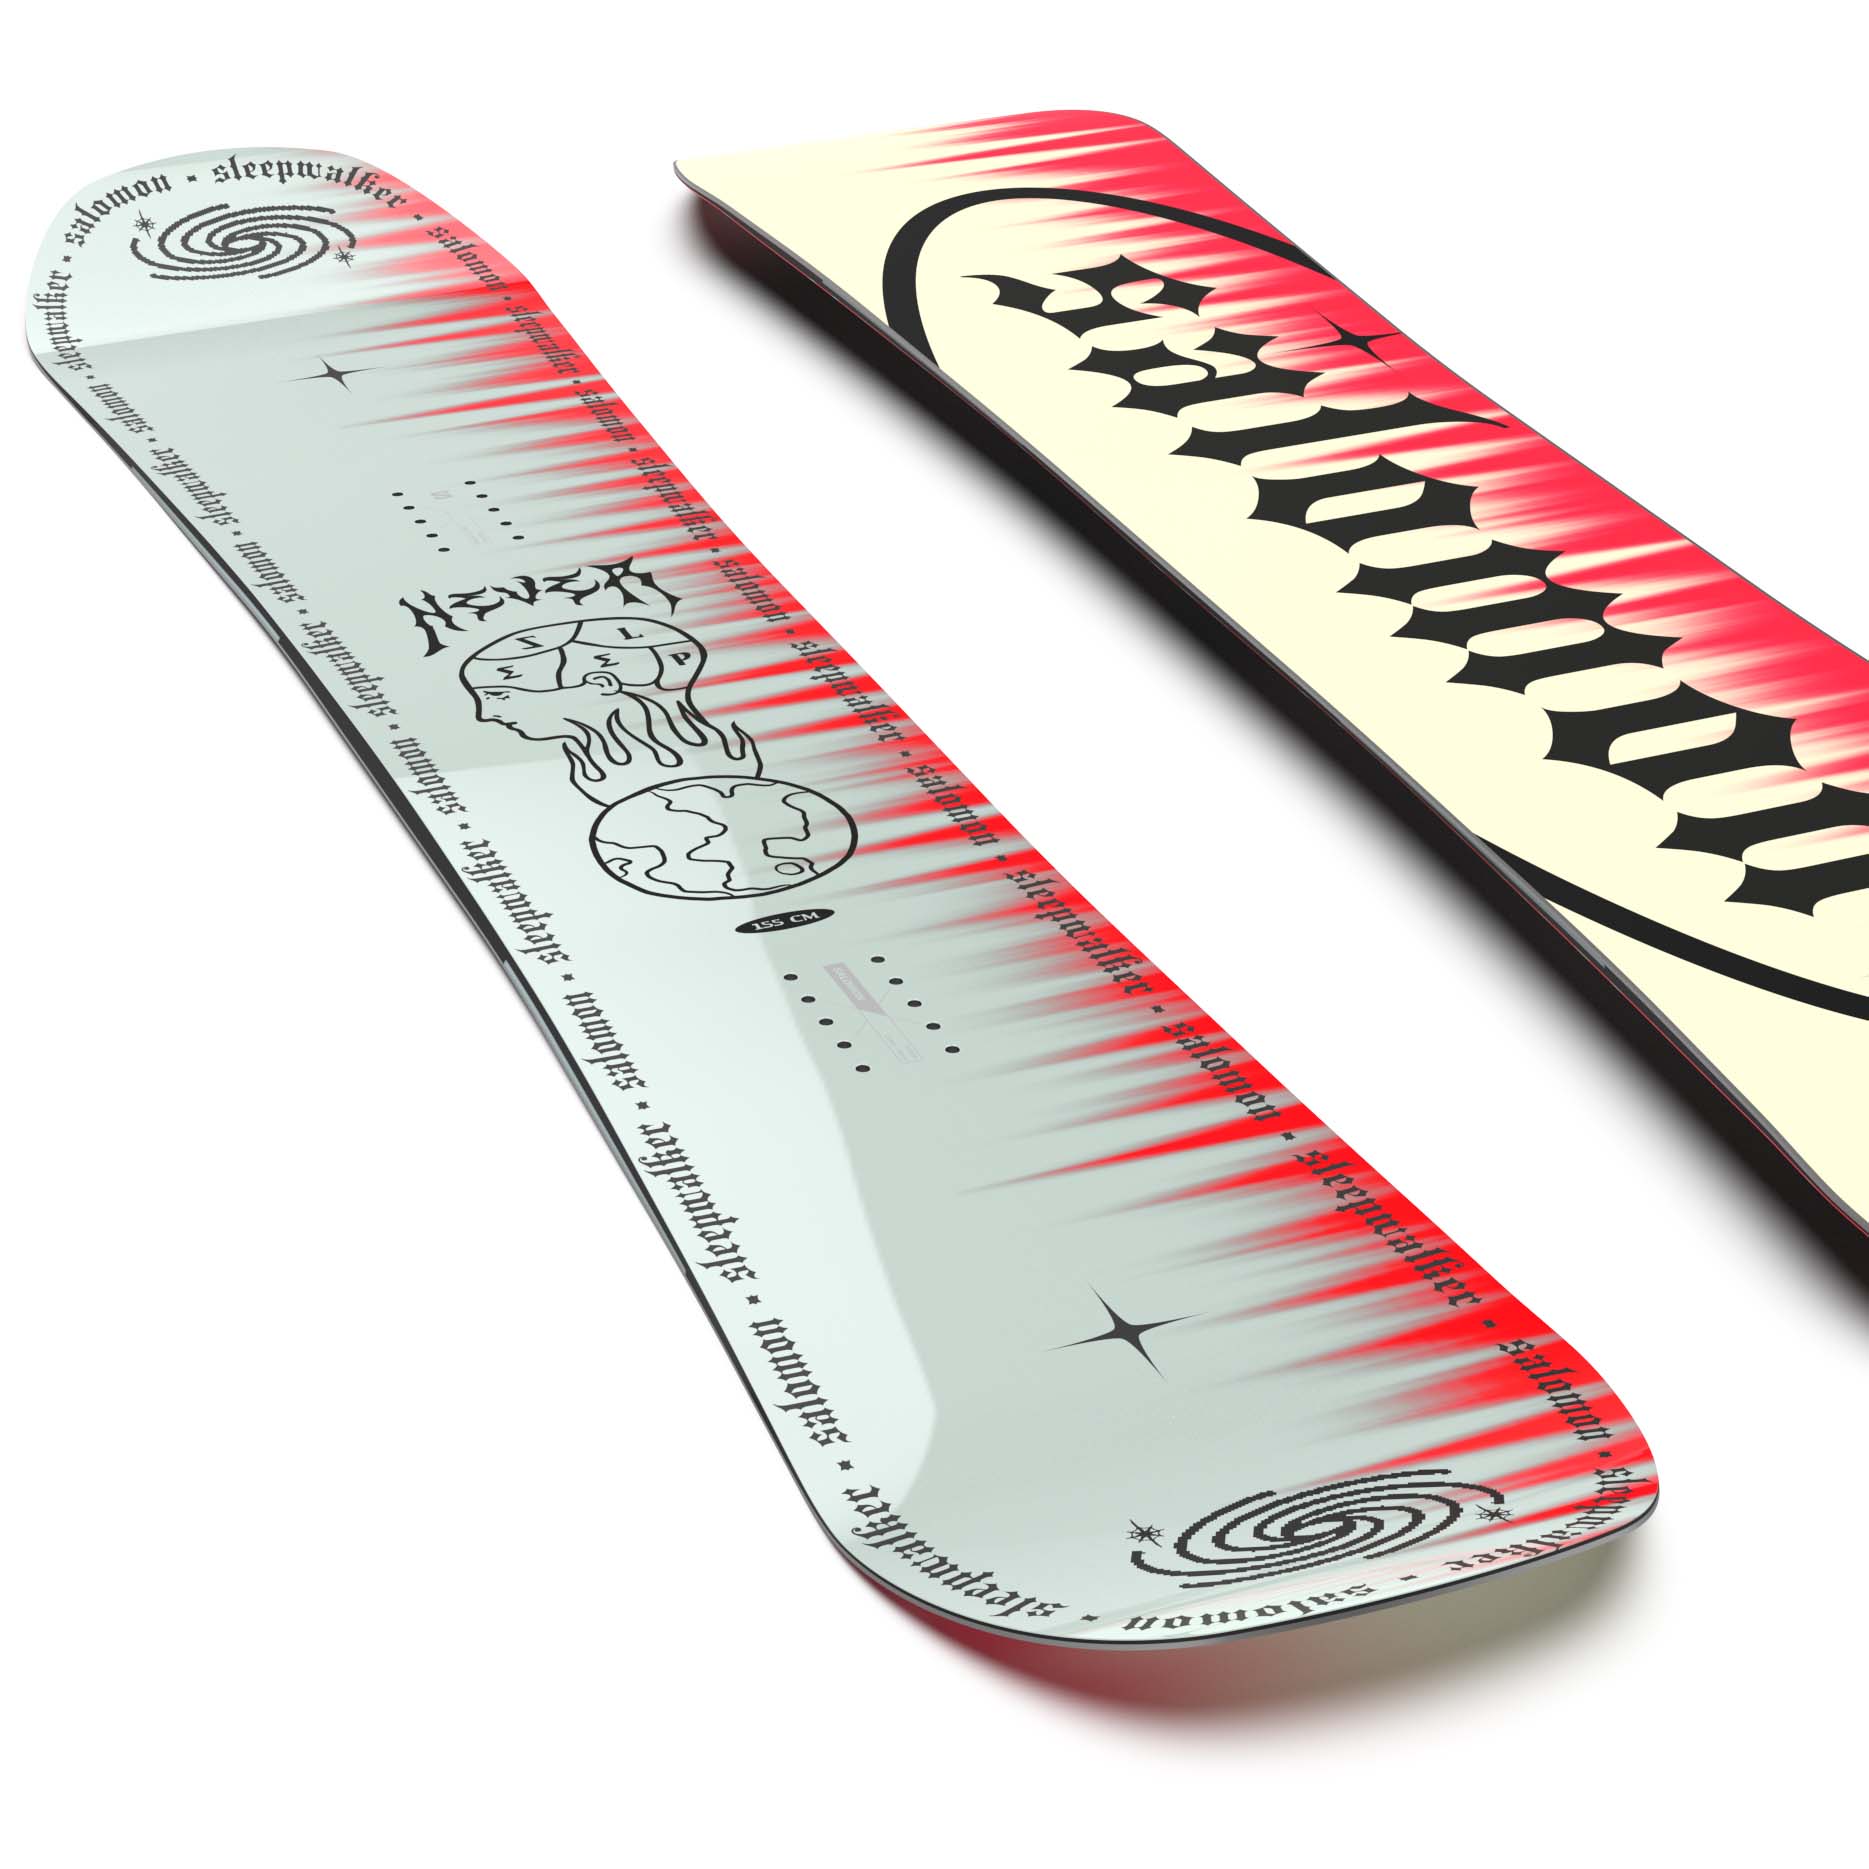 Salomon Sleepwalker Freestyle/Park Snowboard